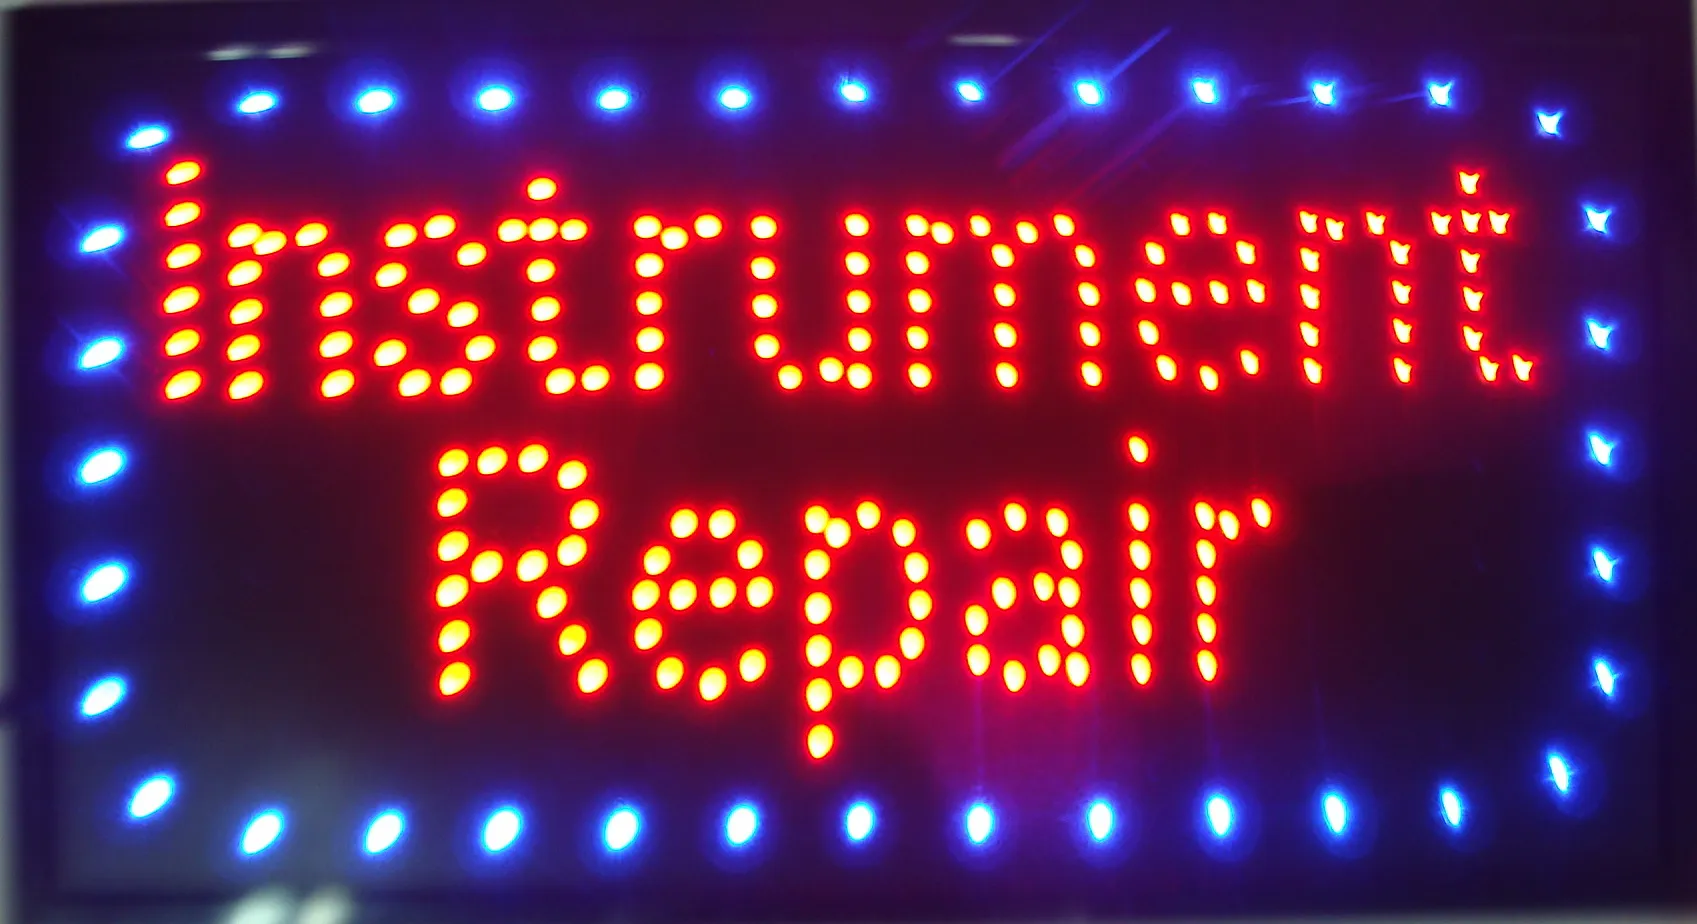 Large 21.5x13" Bright LED Instrument Repair Neon Sign Guitar Drums Fix Shop Open